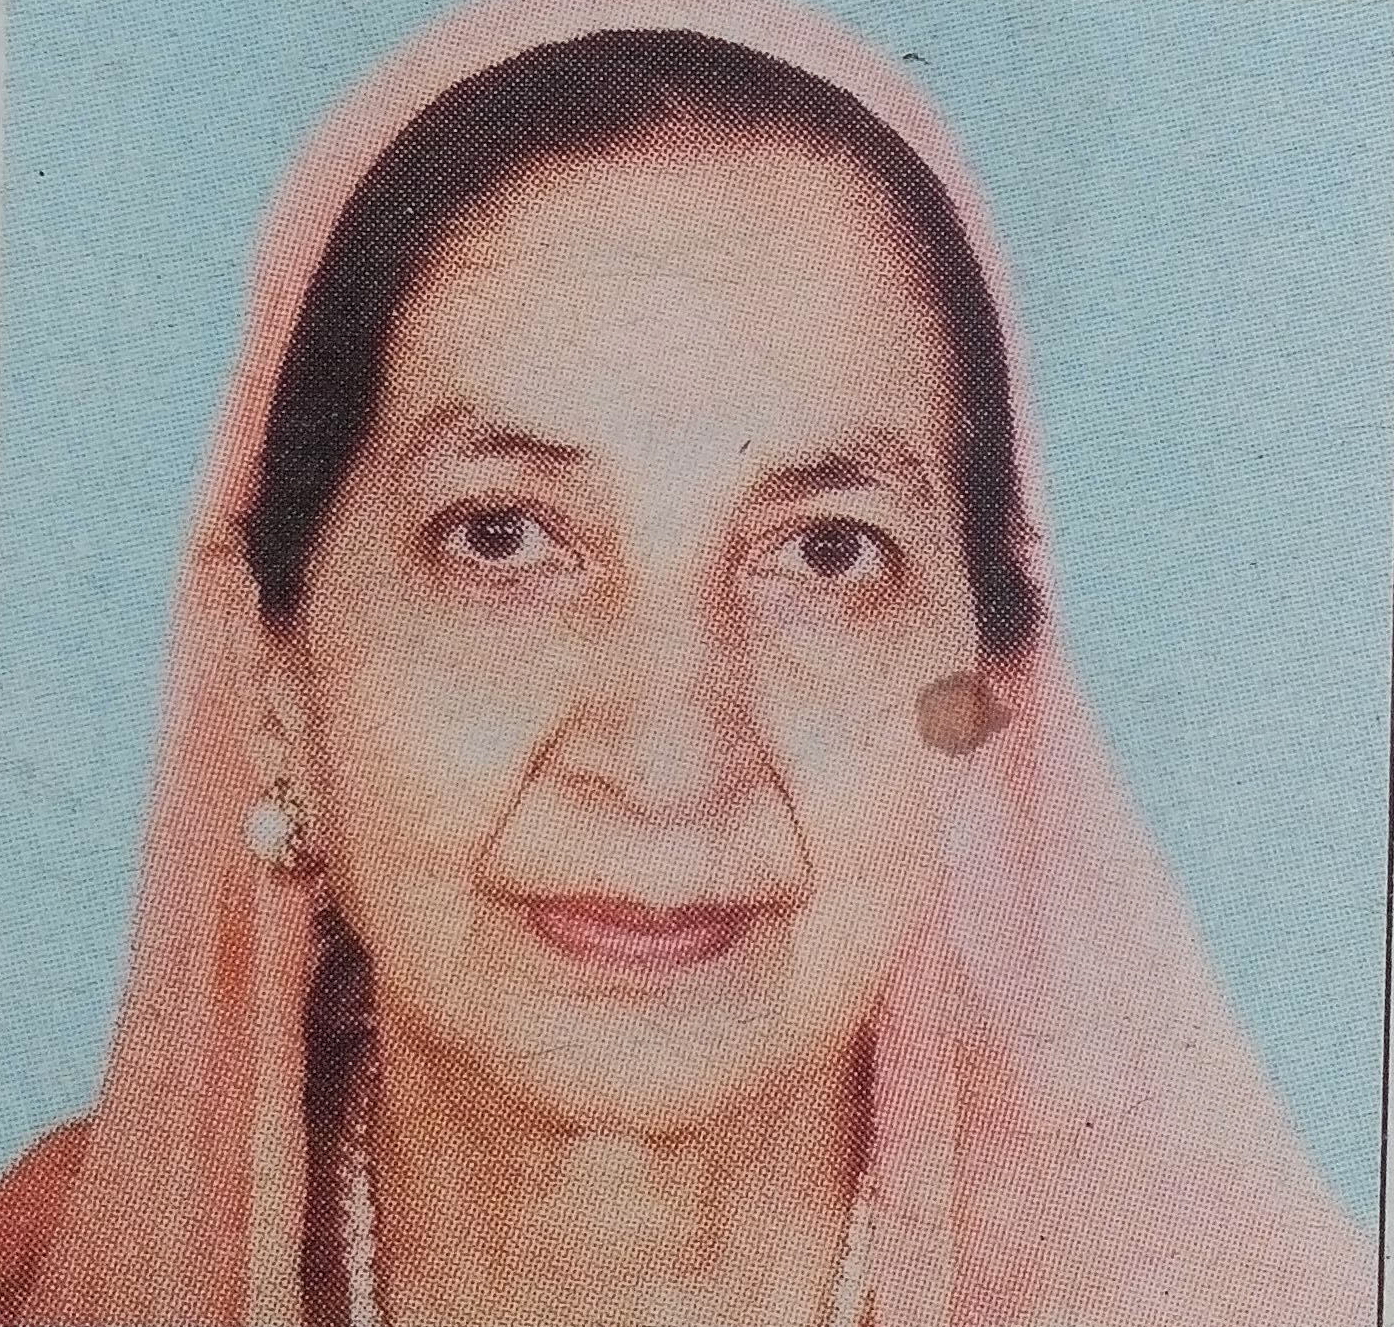 Obituary Image of Resham Kaur Mhay